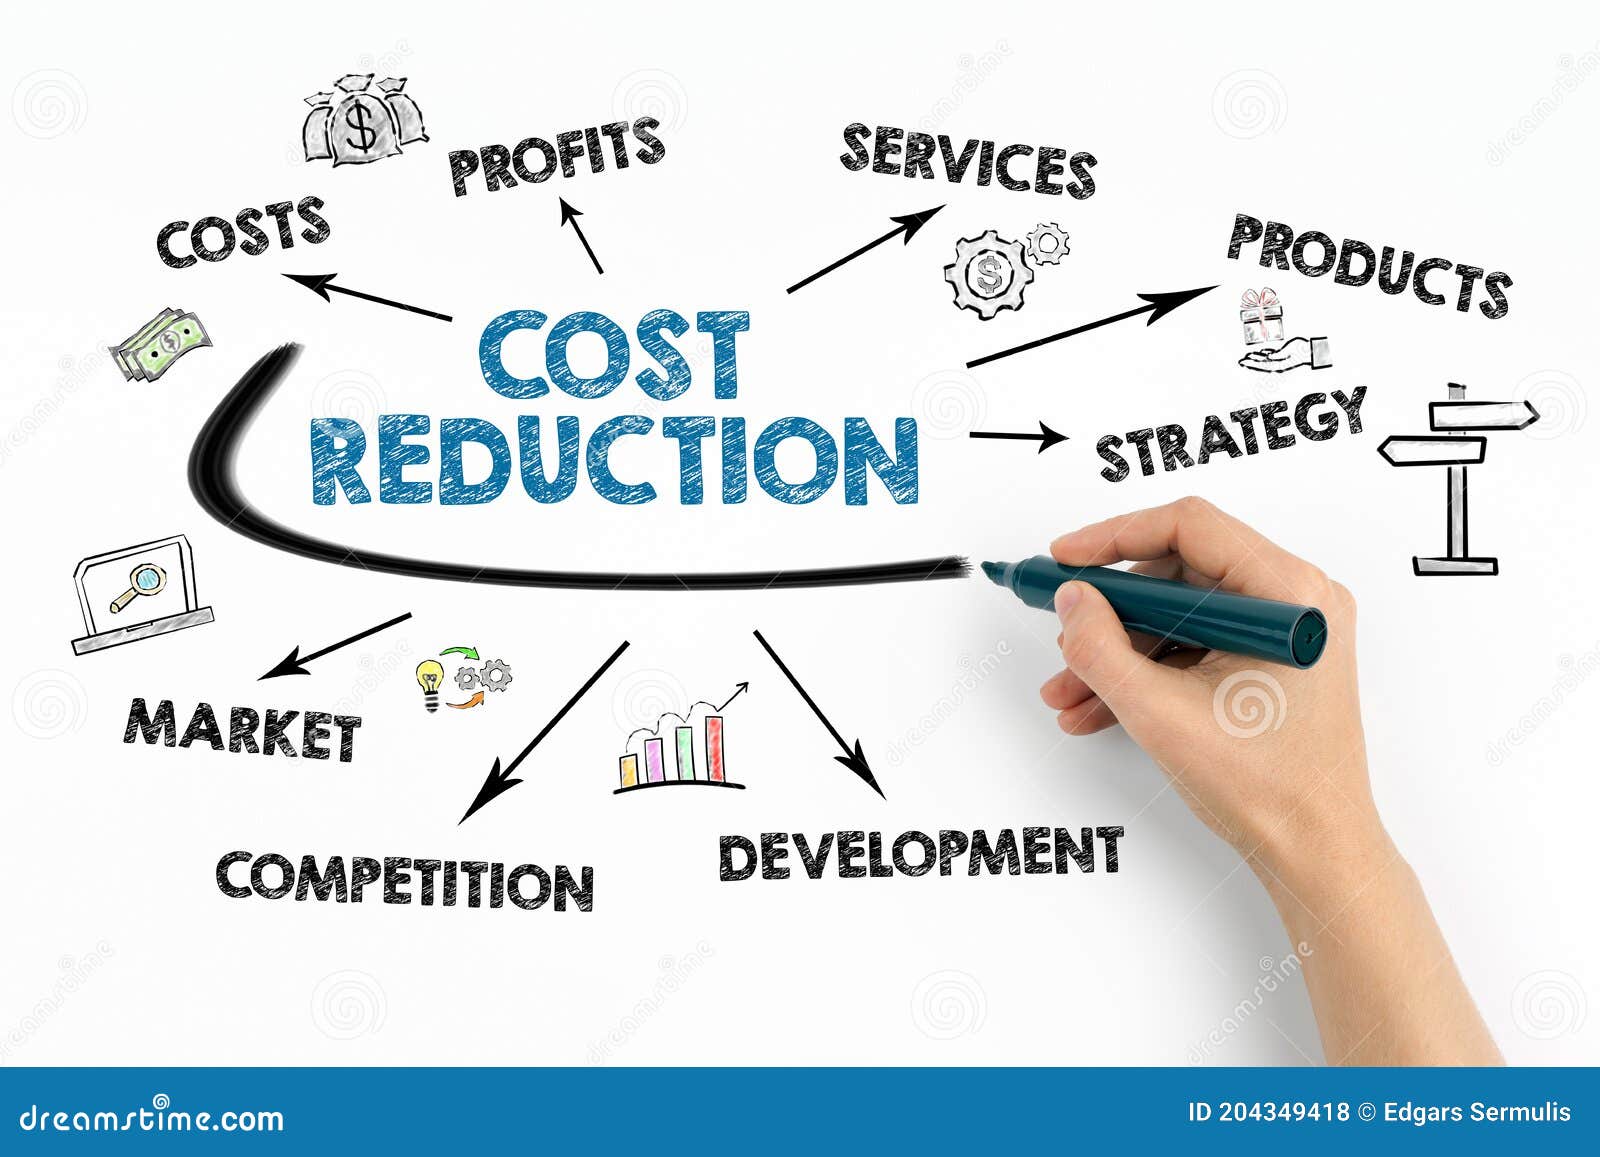 Reducing solution. Cost reduction. Картинка профит сервис. Reducing costs. Low cost преимущества.